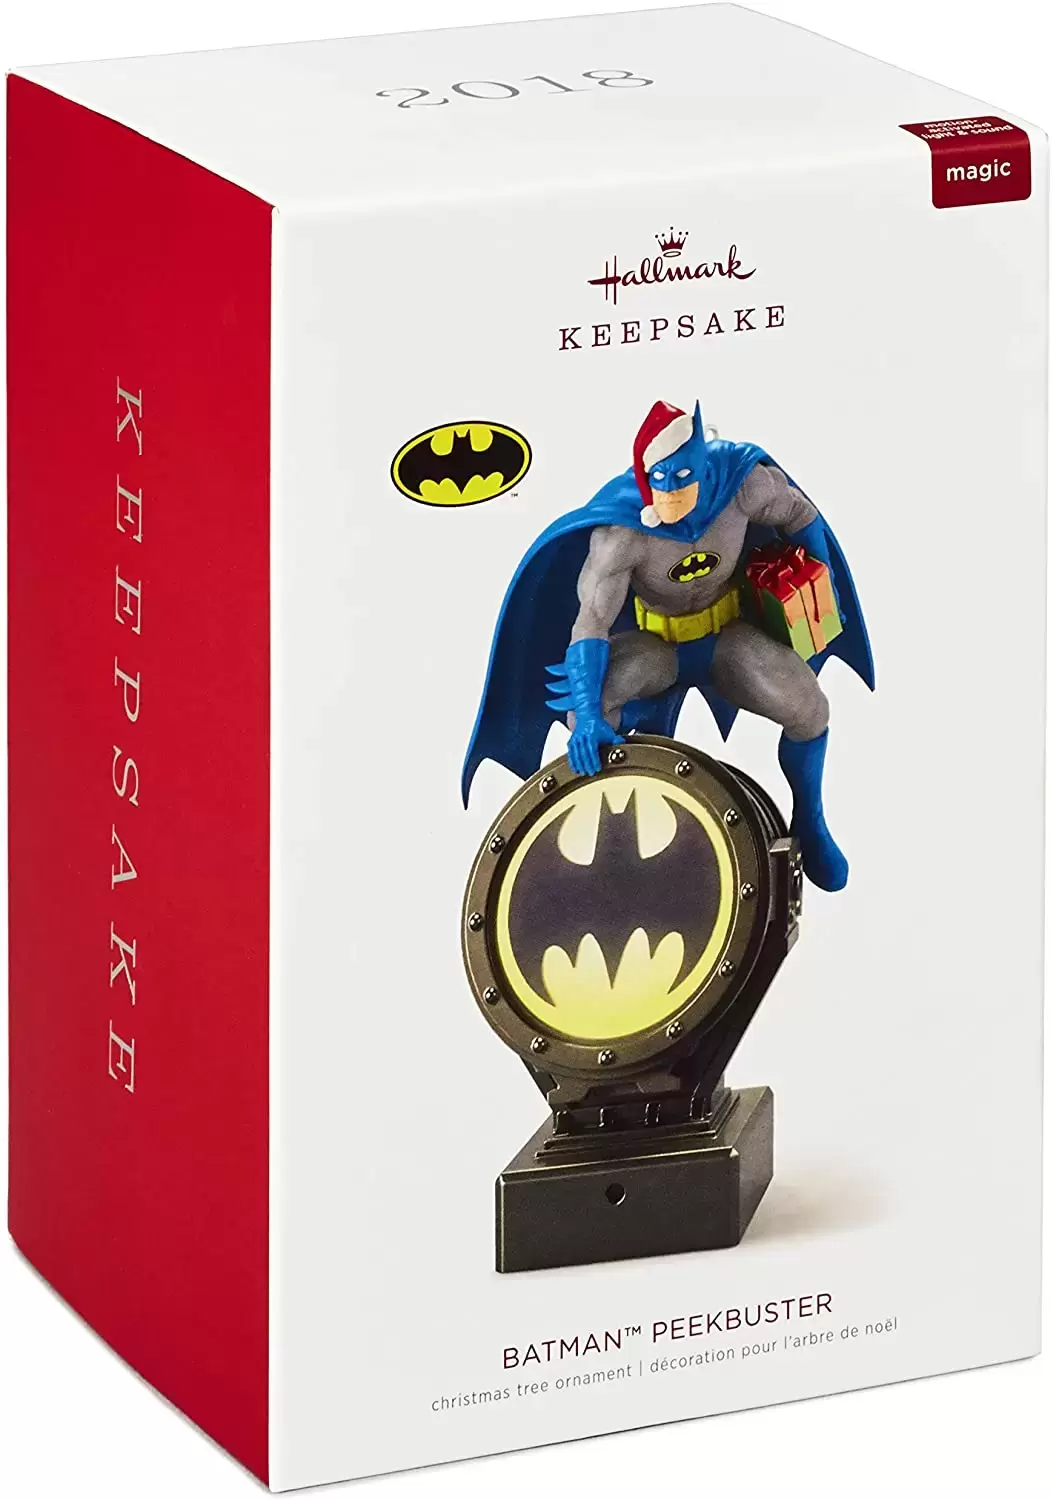 Hallmark Keepsake Ornament DC Super Hero - Batman - Batman Peekbuster